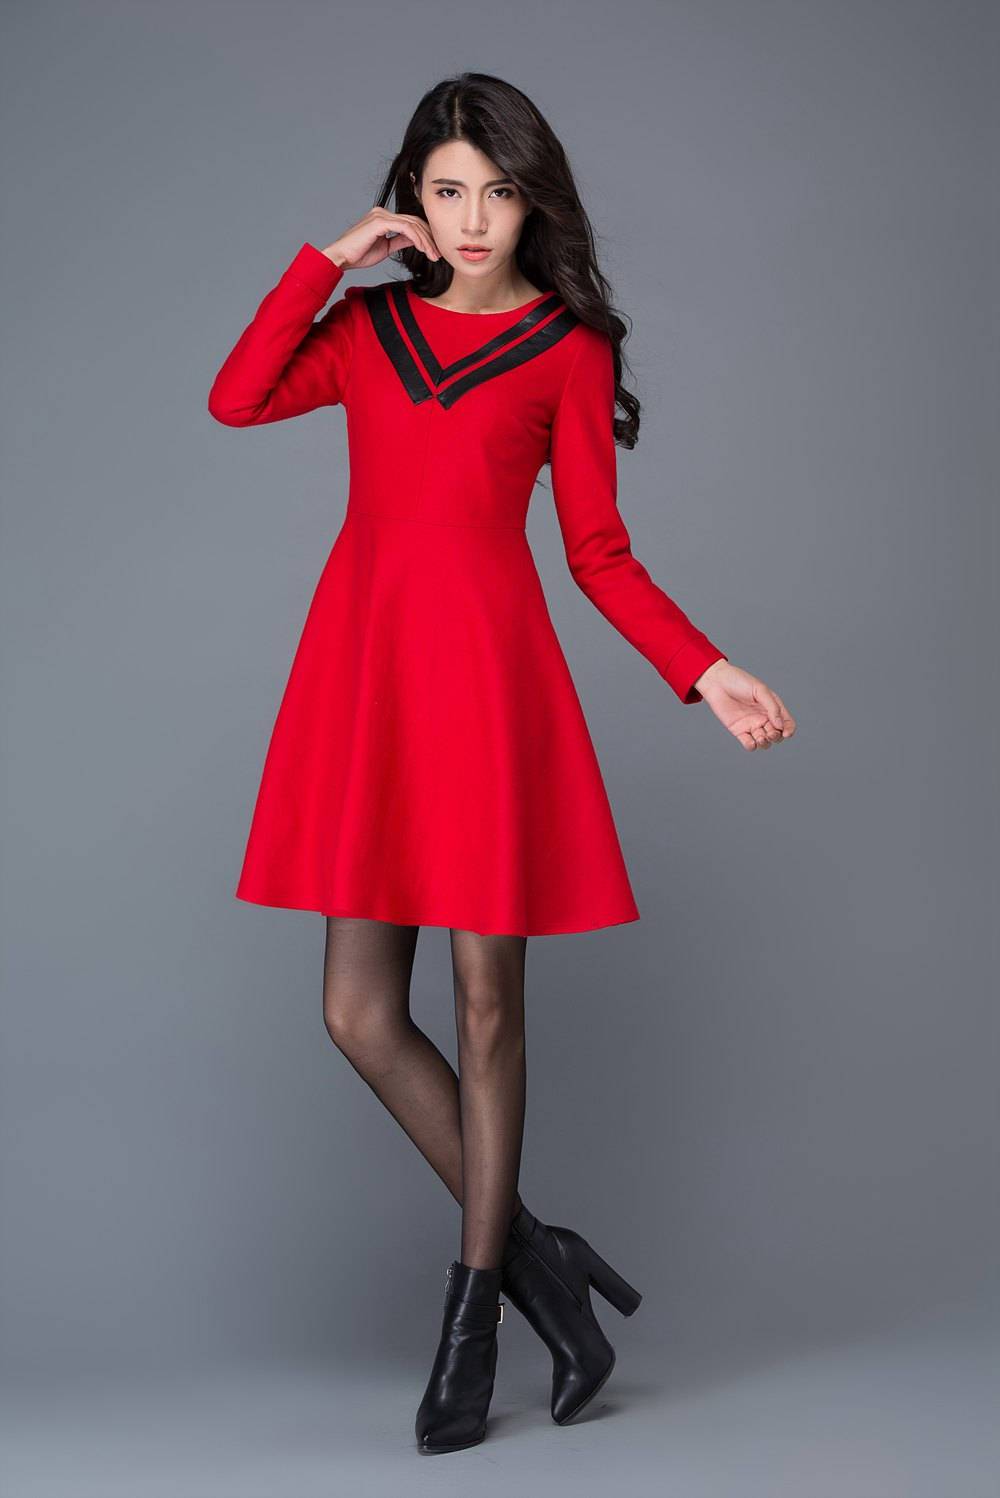 red winter dress